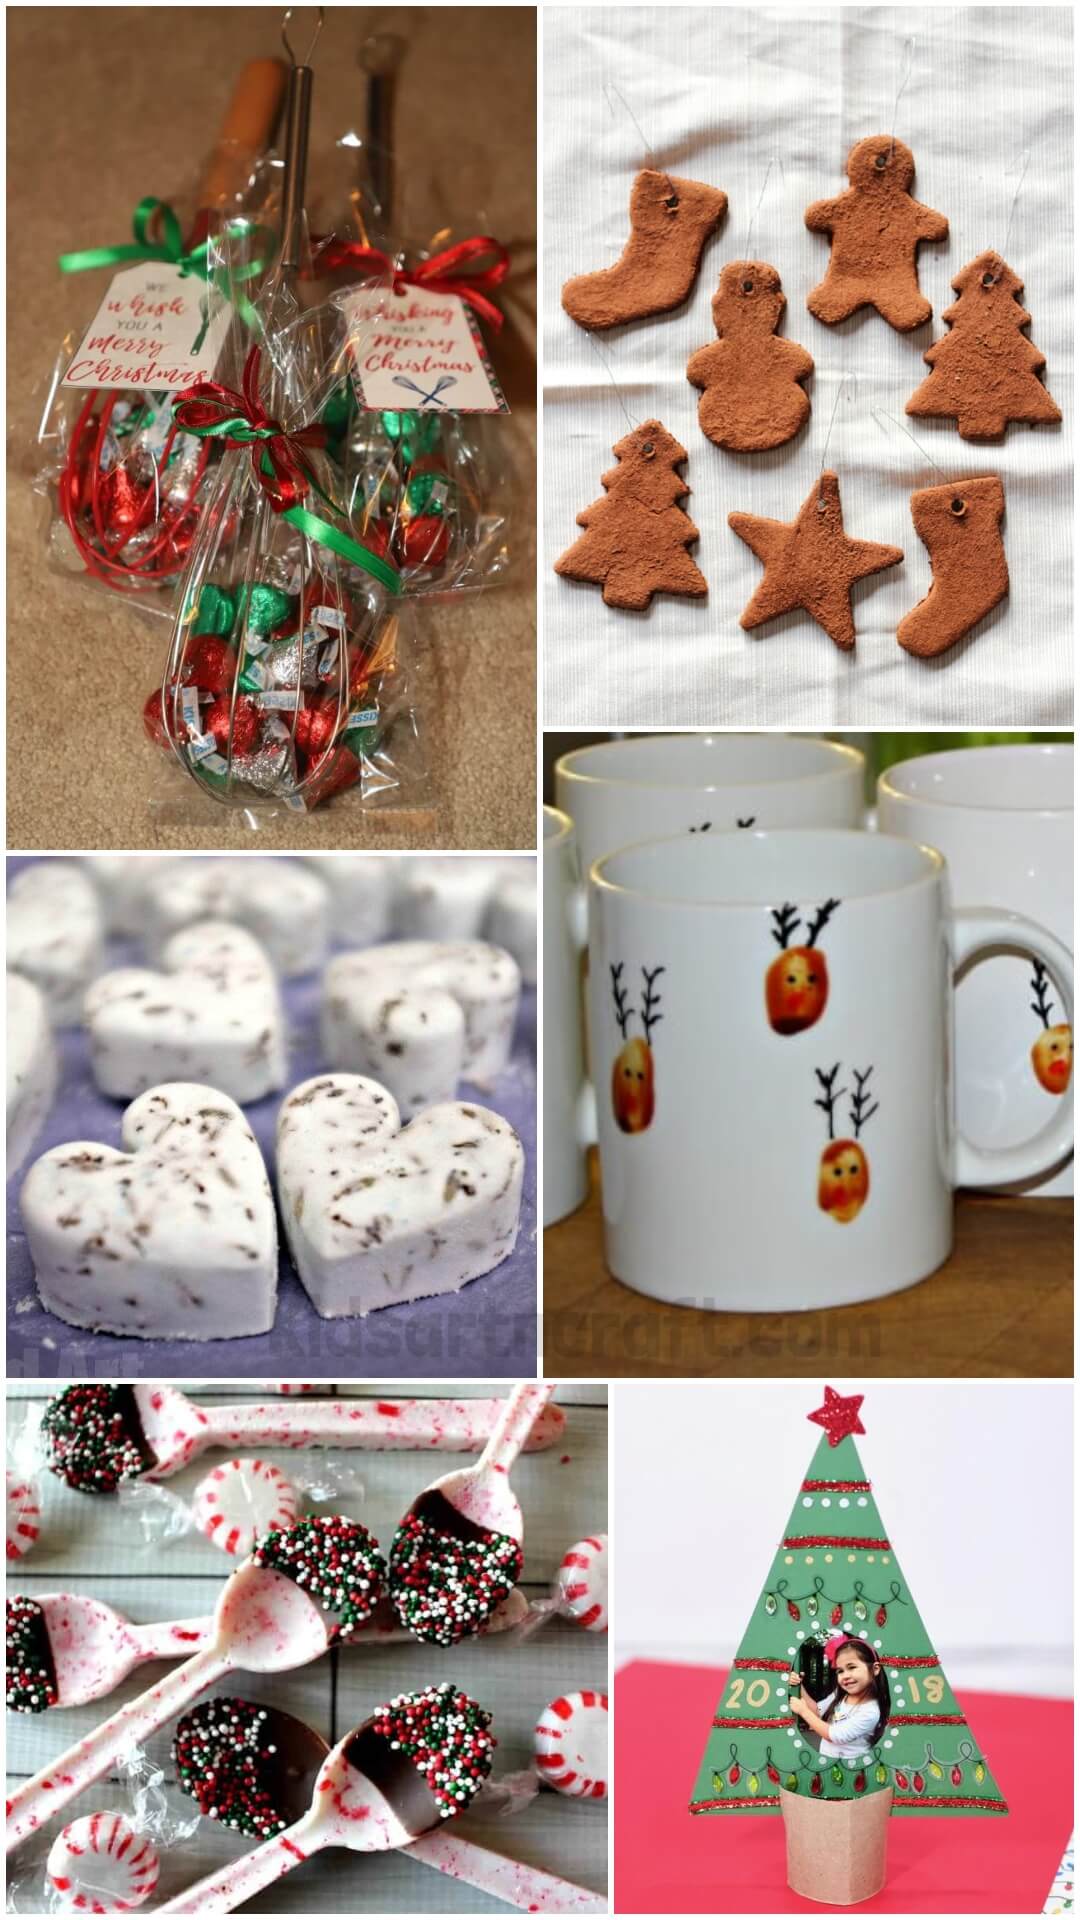 Christmas Gift Ideas For Kids